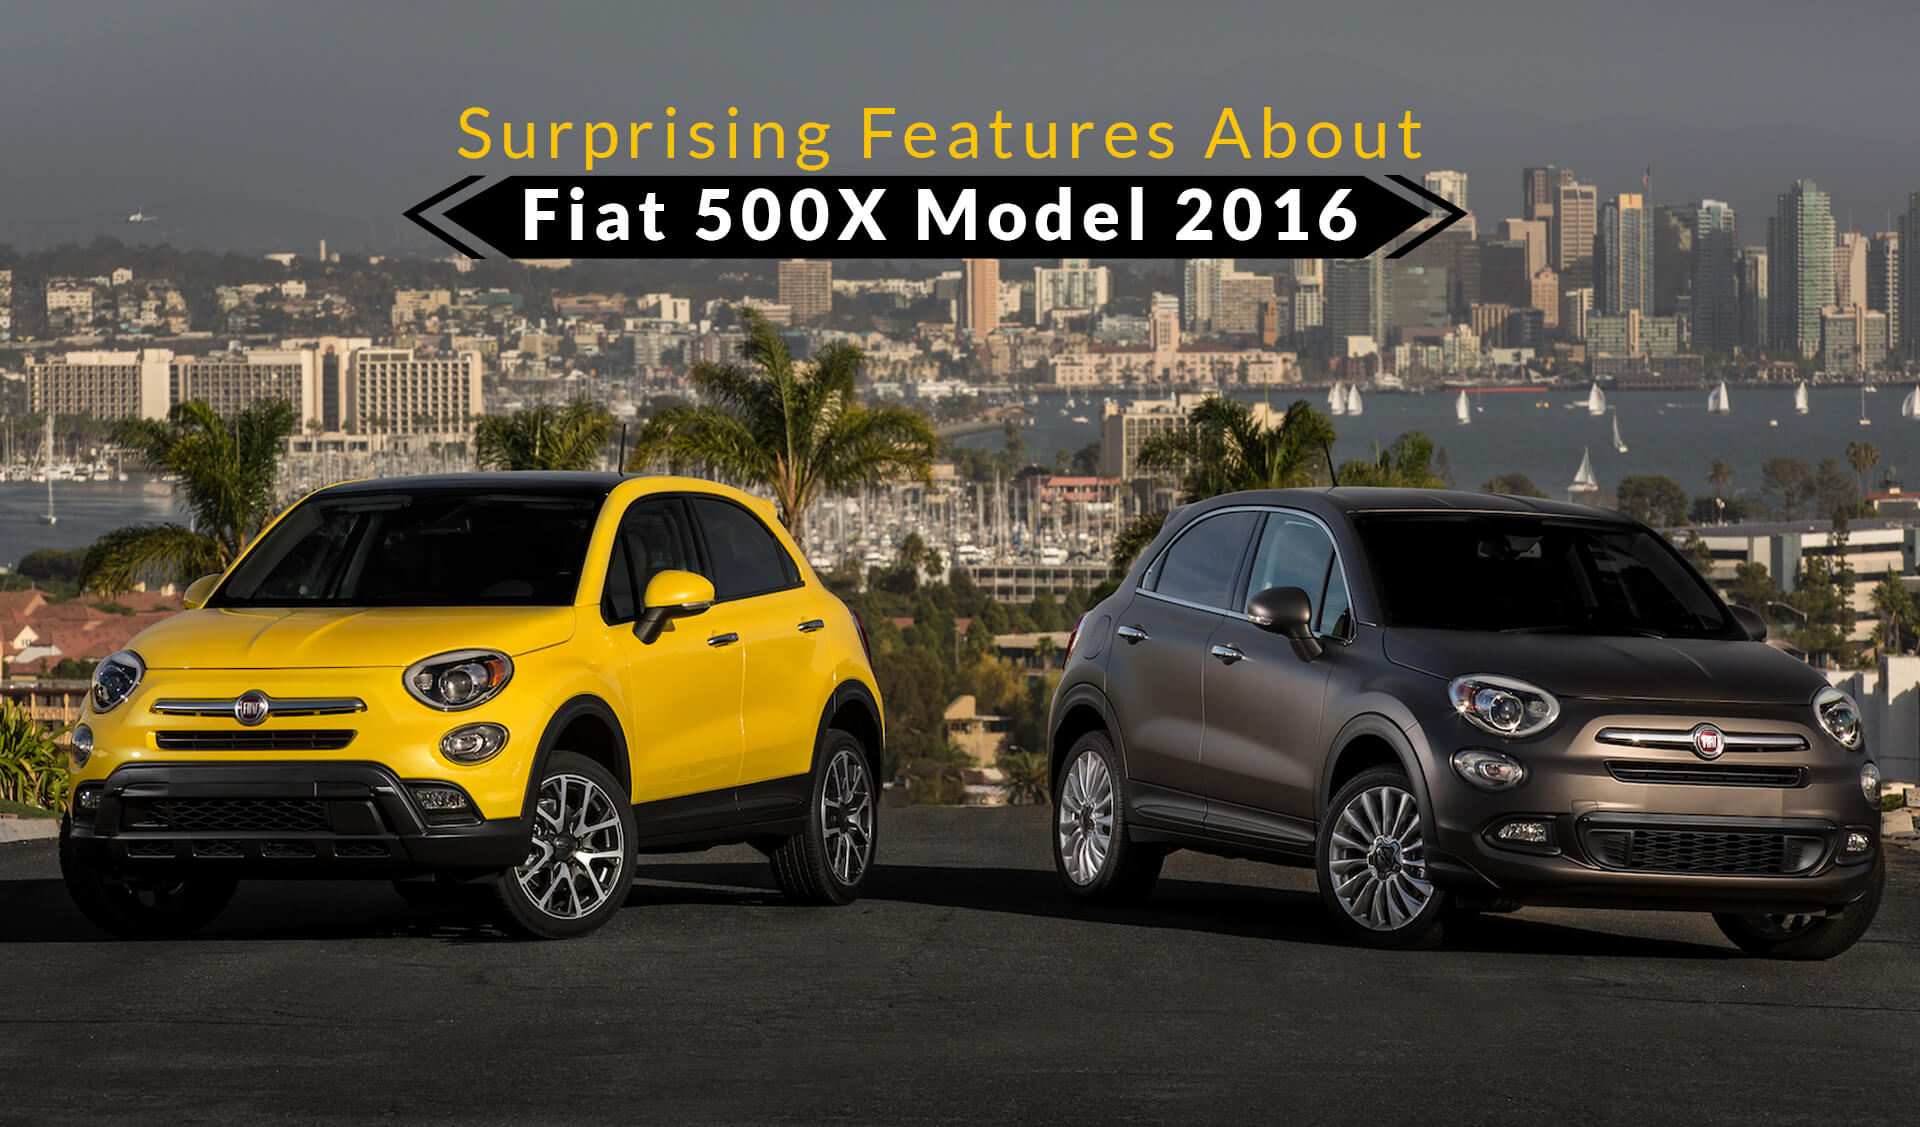 Surprising Features About Fiat 500X Model 2016